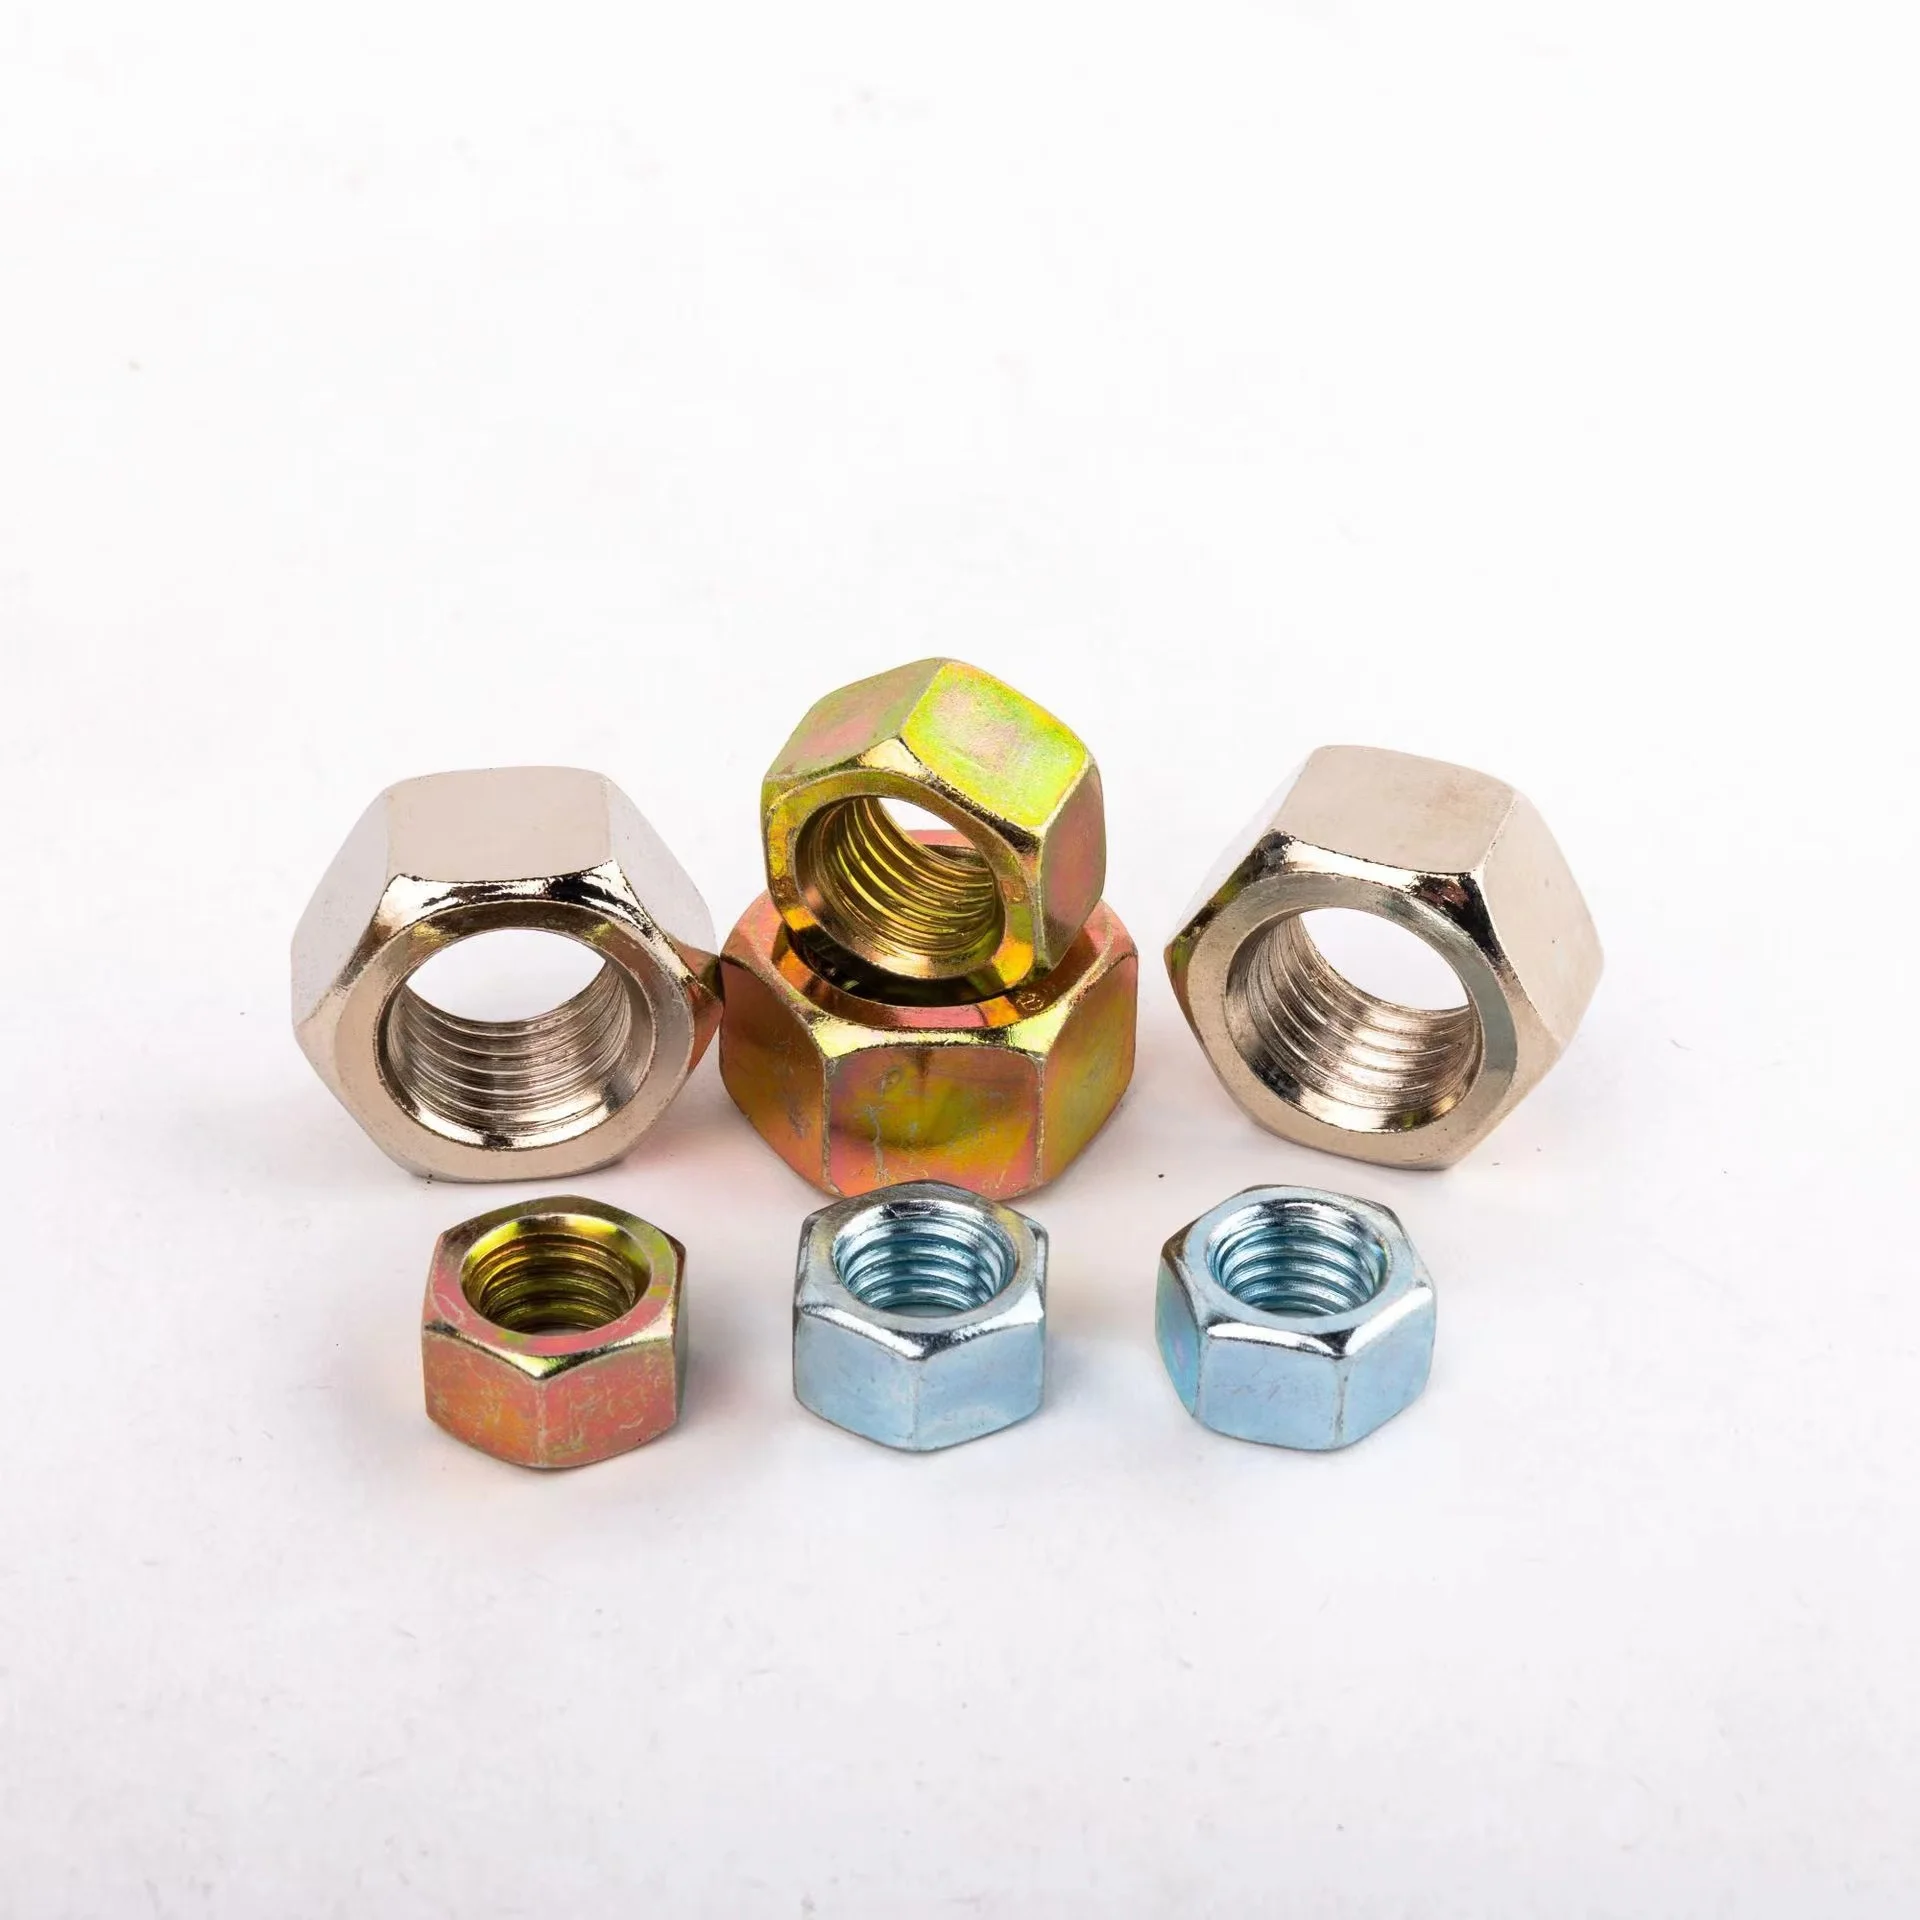 Hexagon Nut Carbon Steel 8.8 Grade Galvanized Nut Screw Cap